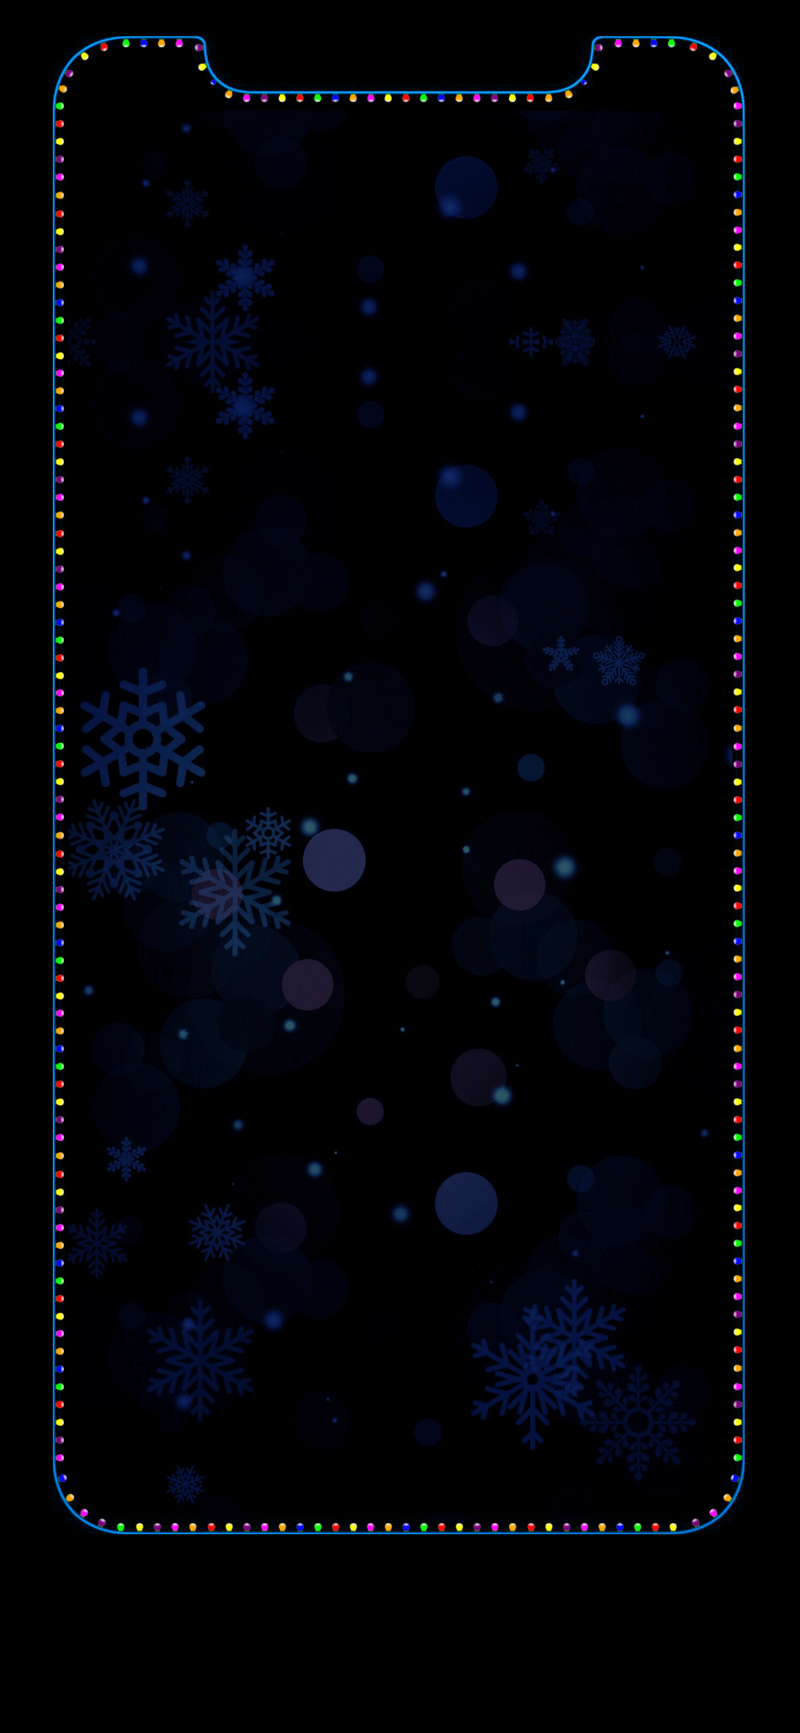 Best Christmas Wallpaper For iPhone Other Smartphones